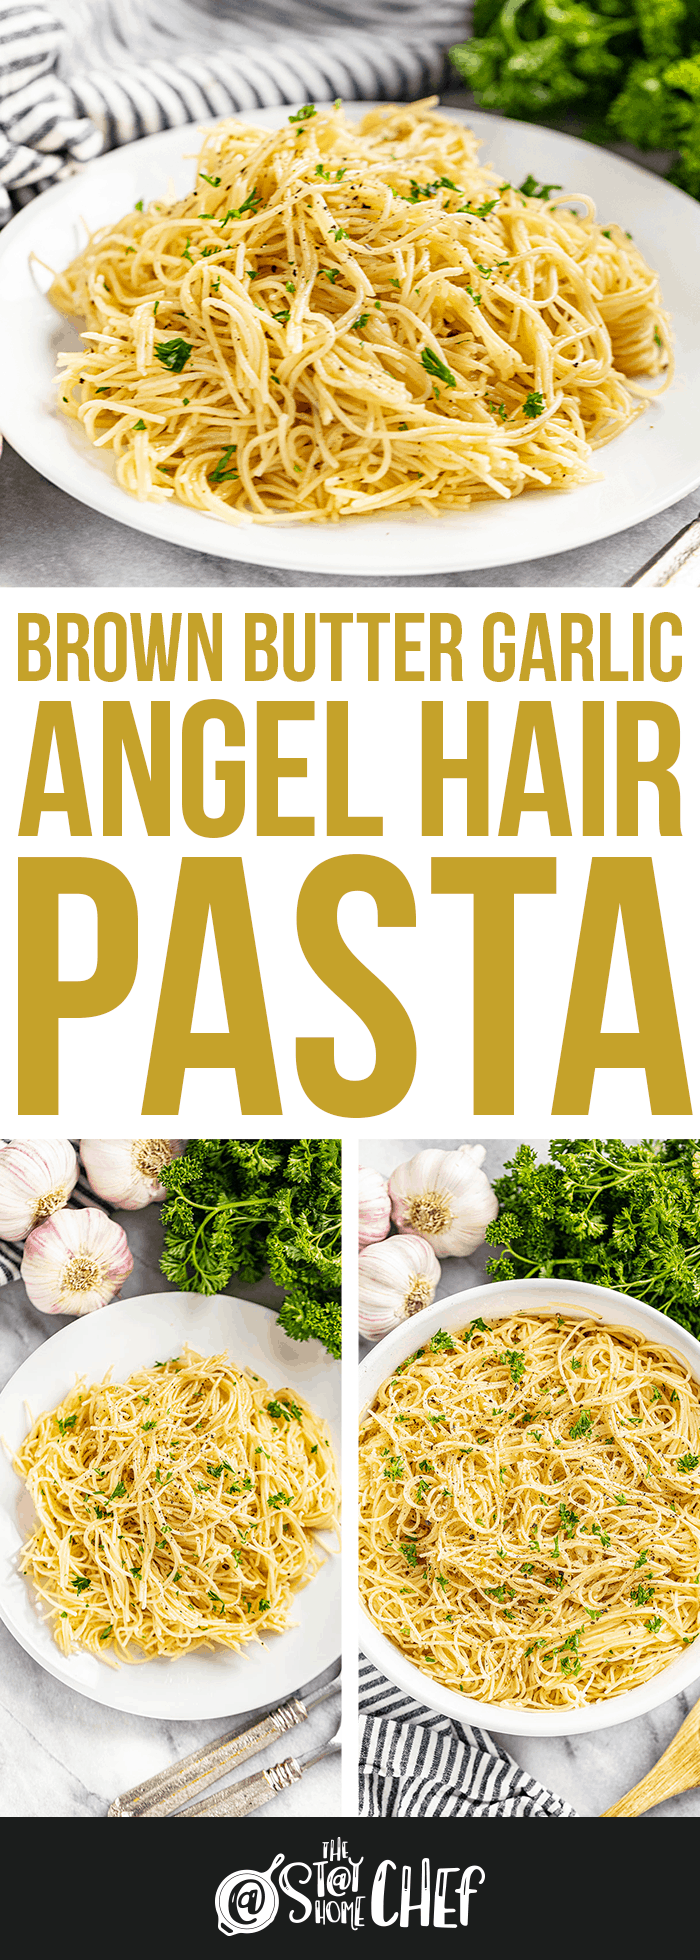 Brown Butter Garlic Angel Hair Pasta